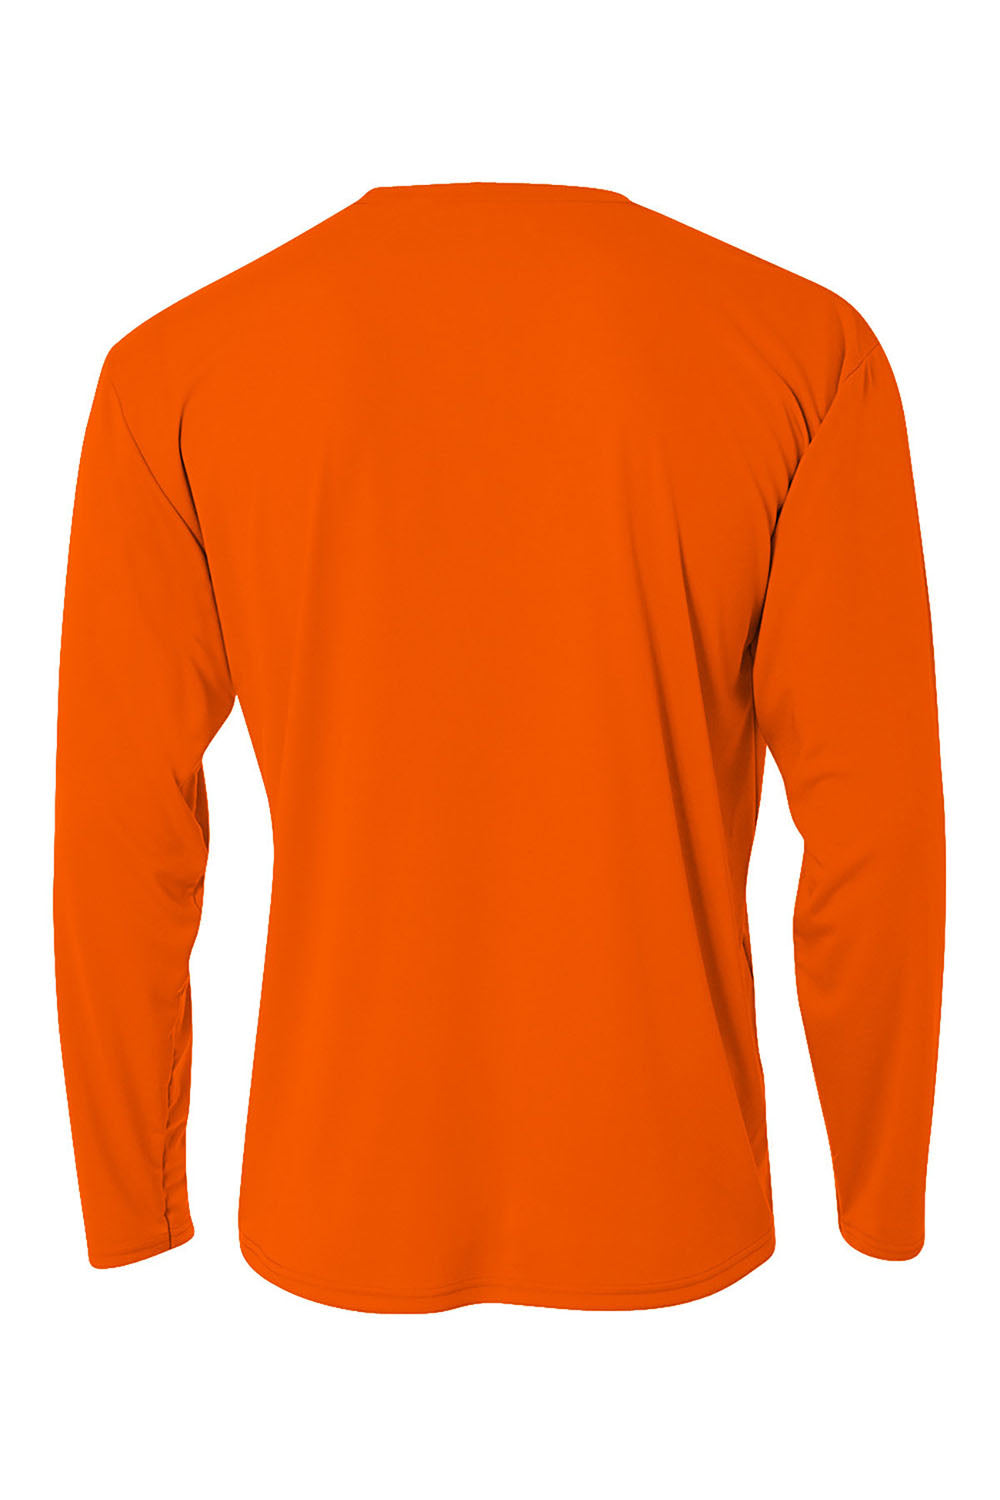 A4 N3165 Mens Performance Moisture Wicking Long Sleeve Crewneck T-Shirt Safety Orange Flat Back